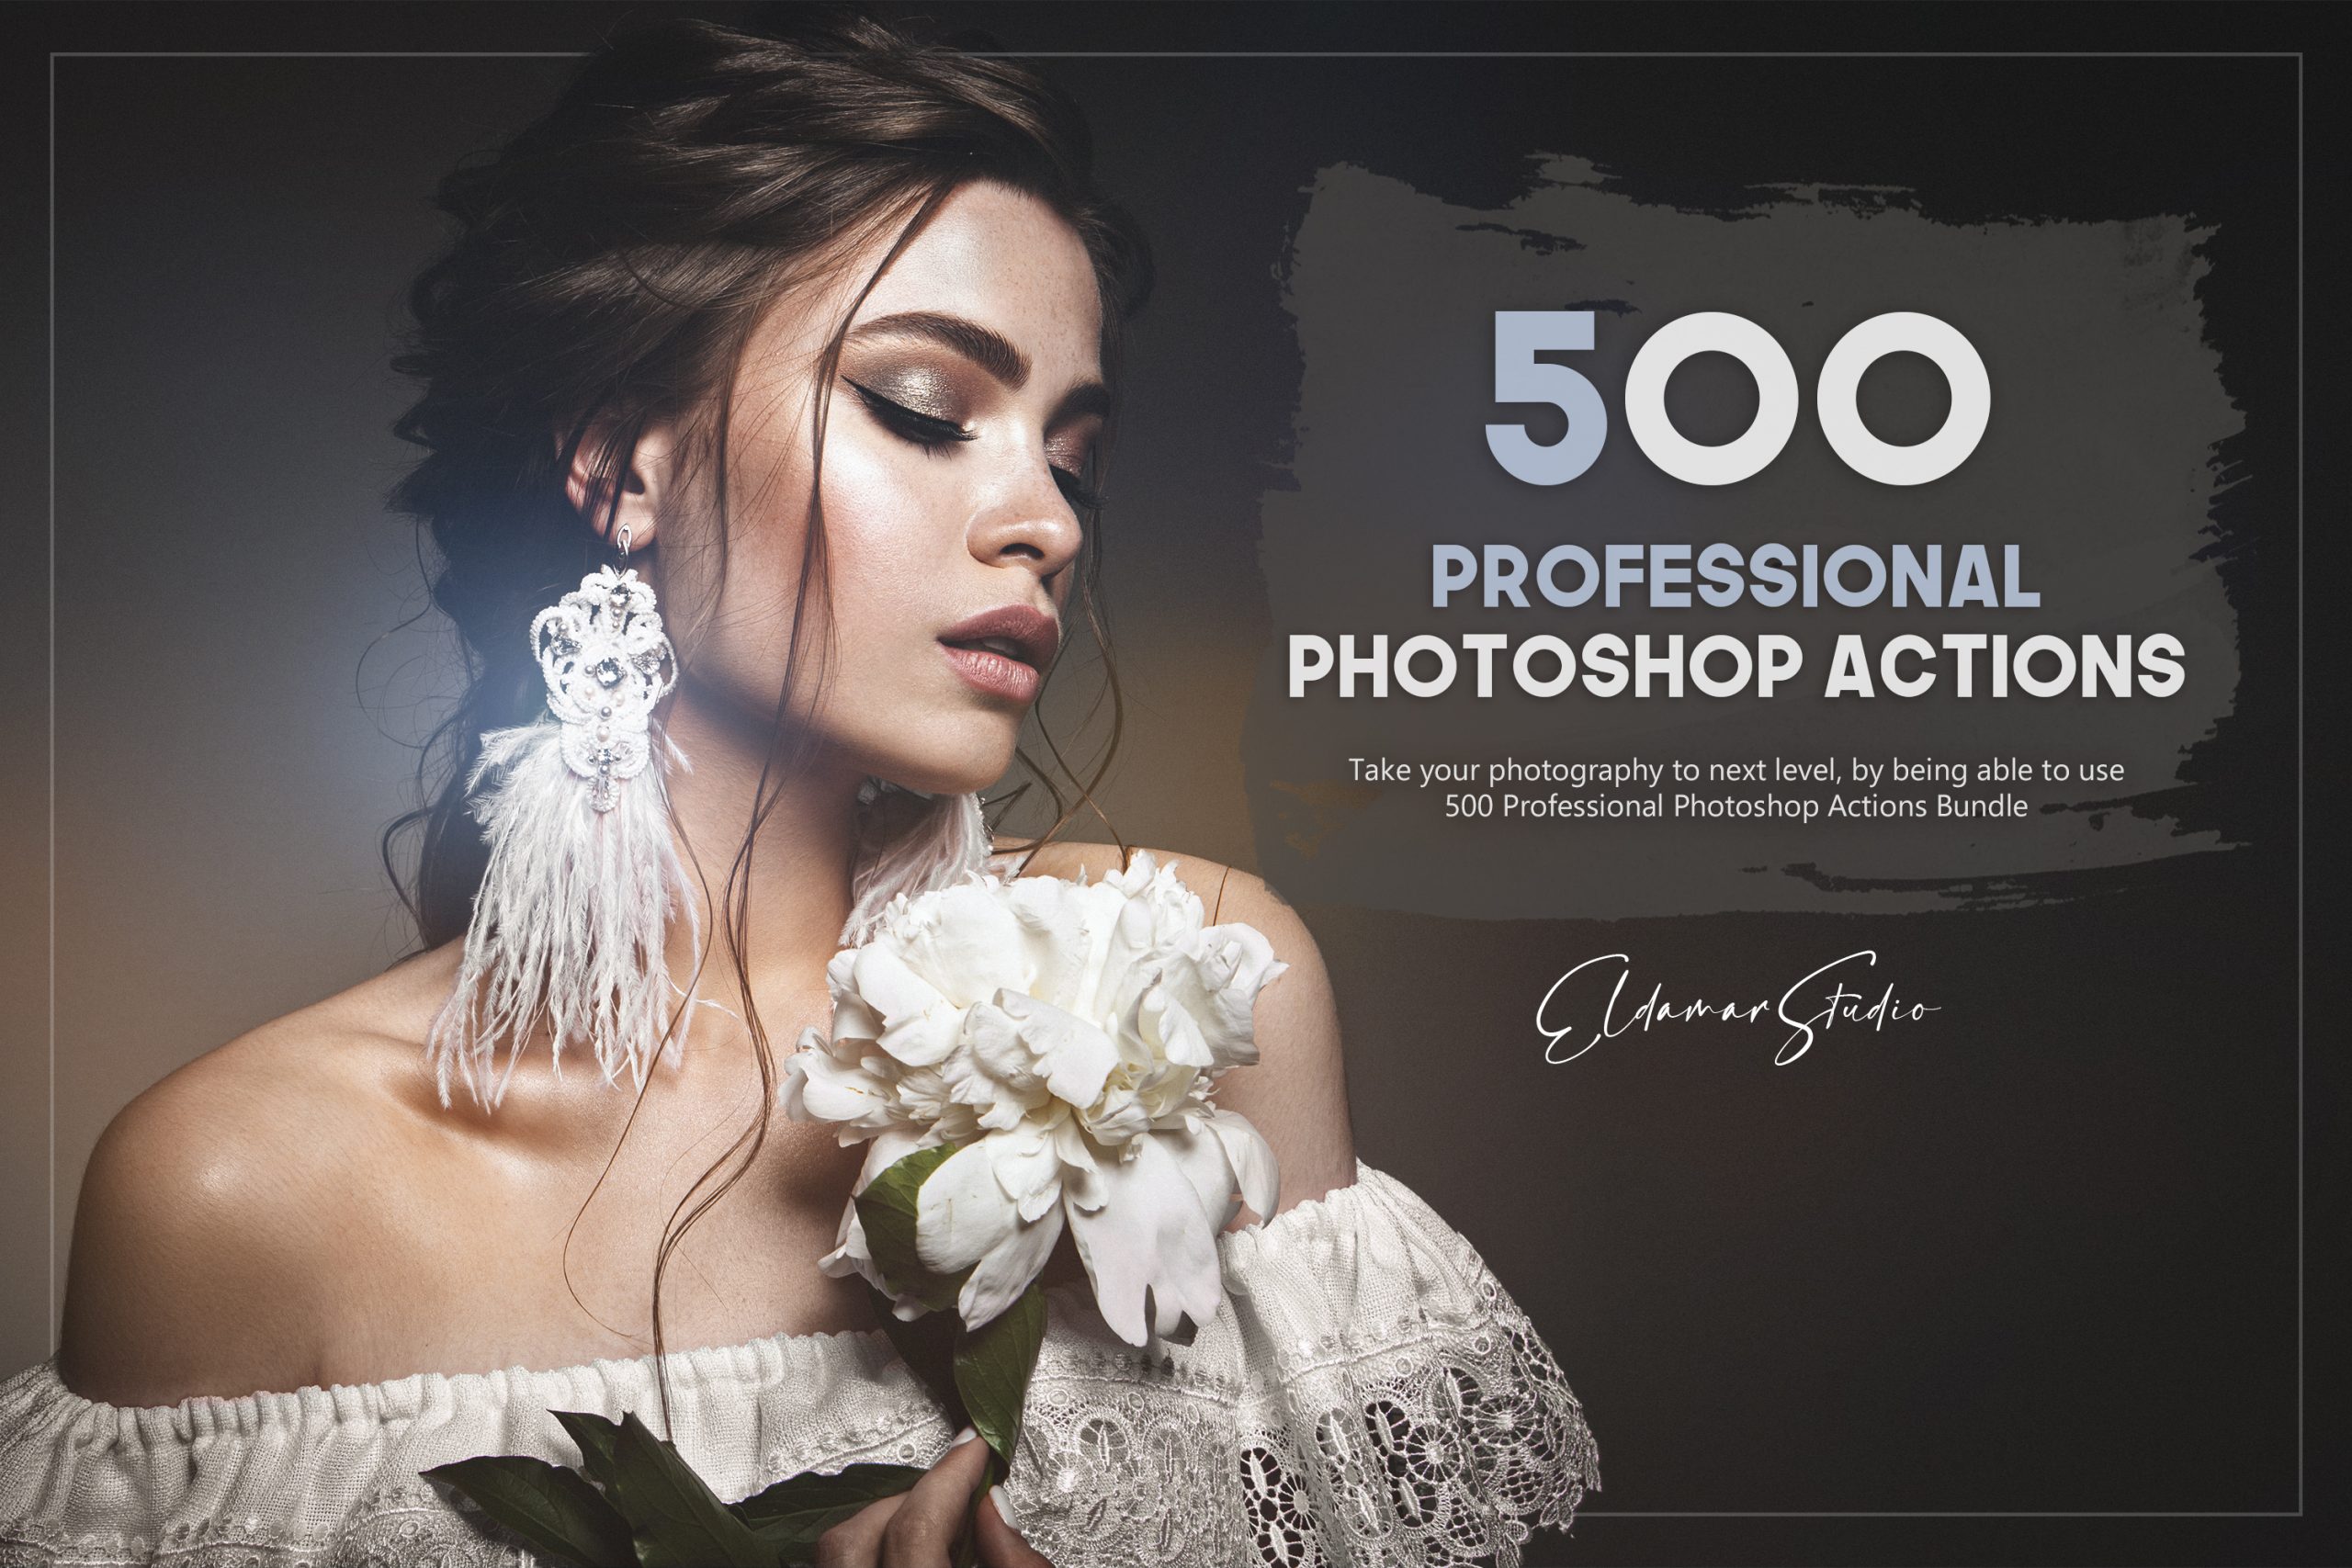 500-Professional-Photoshop-Actions-Bundle-scalede0a62195520edd01.jpeg